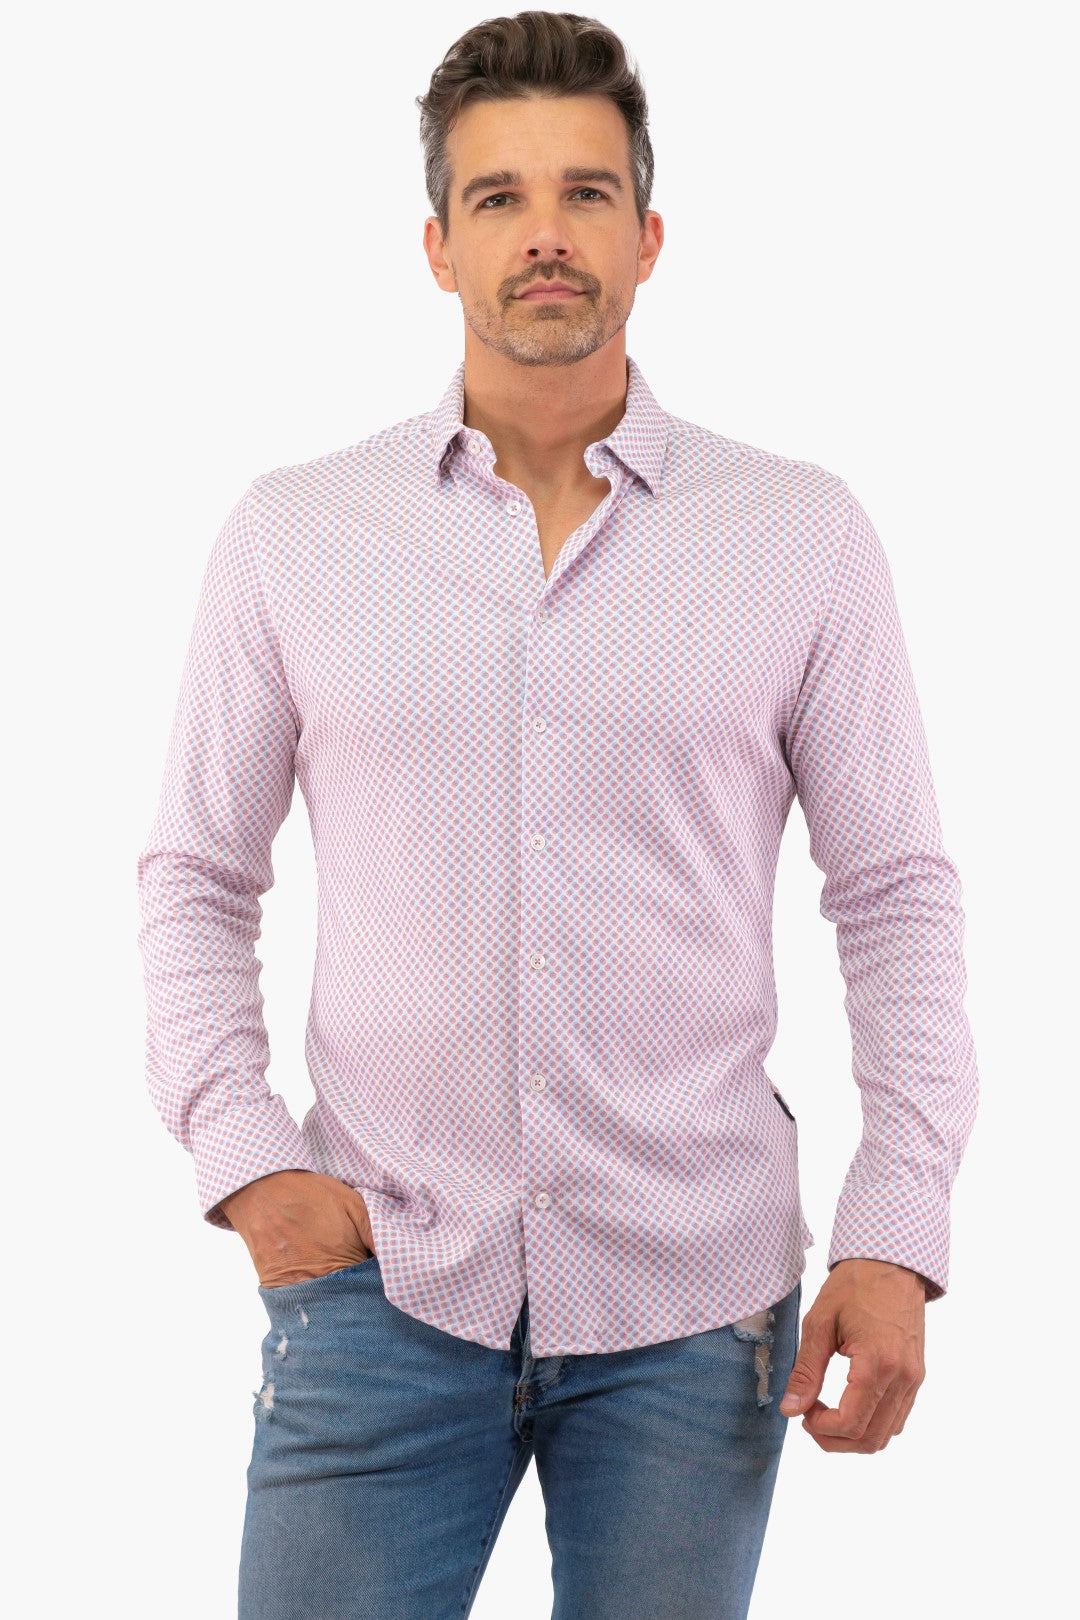 Hörst Long Sleeve Shirt in Raspberry color (Off-Hrsl241708-605)